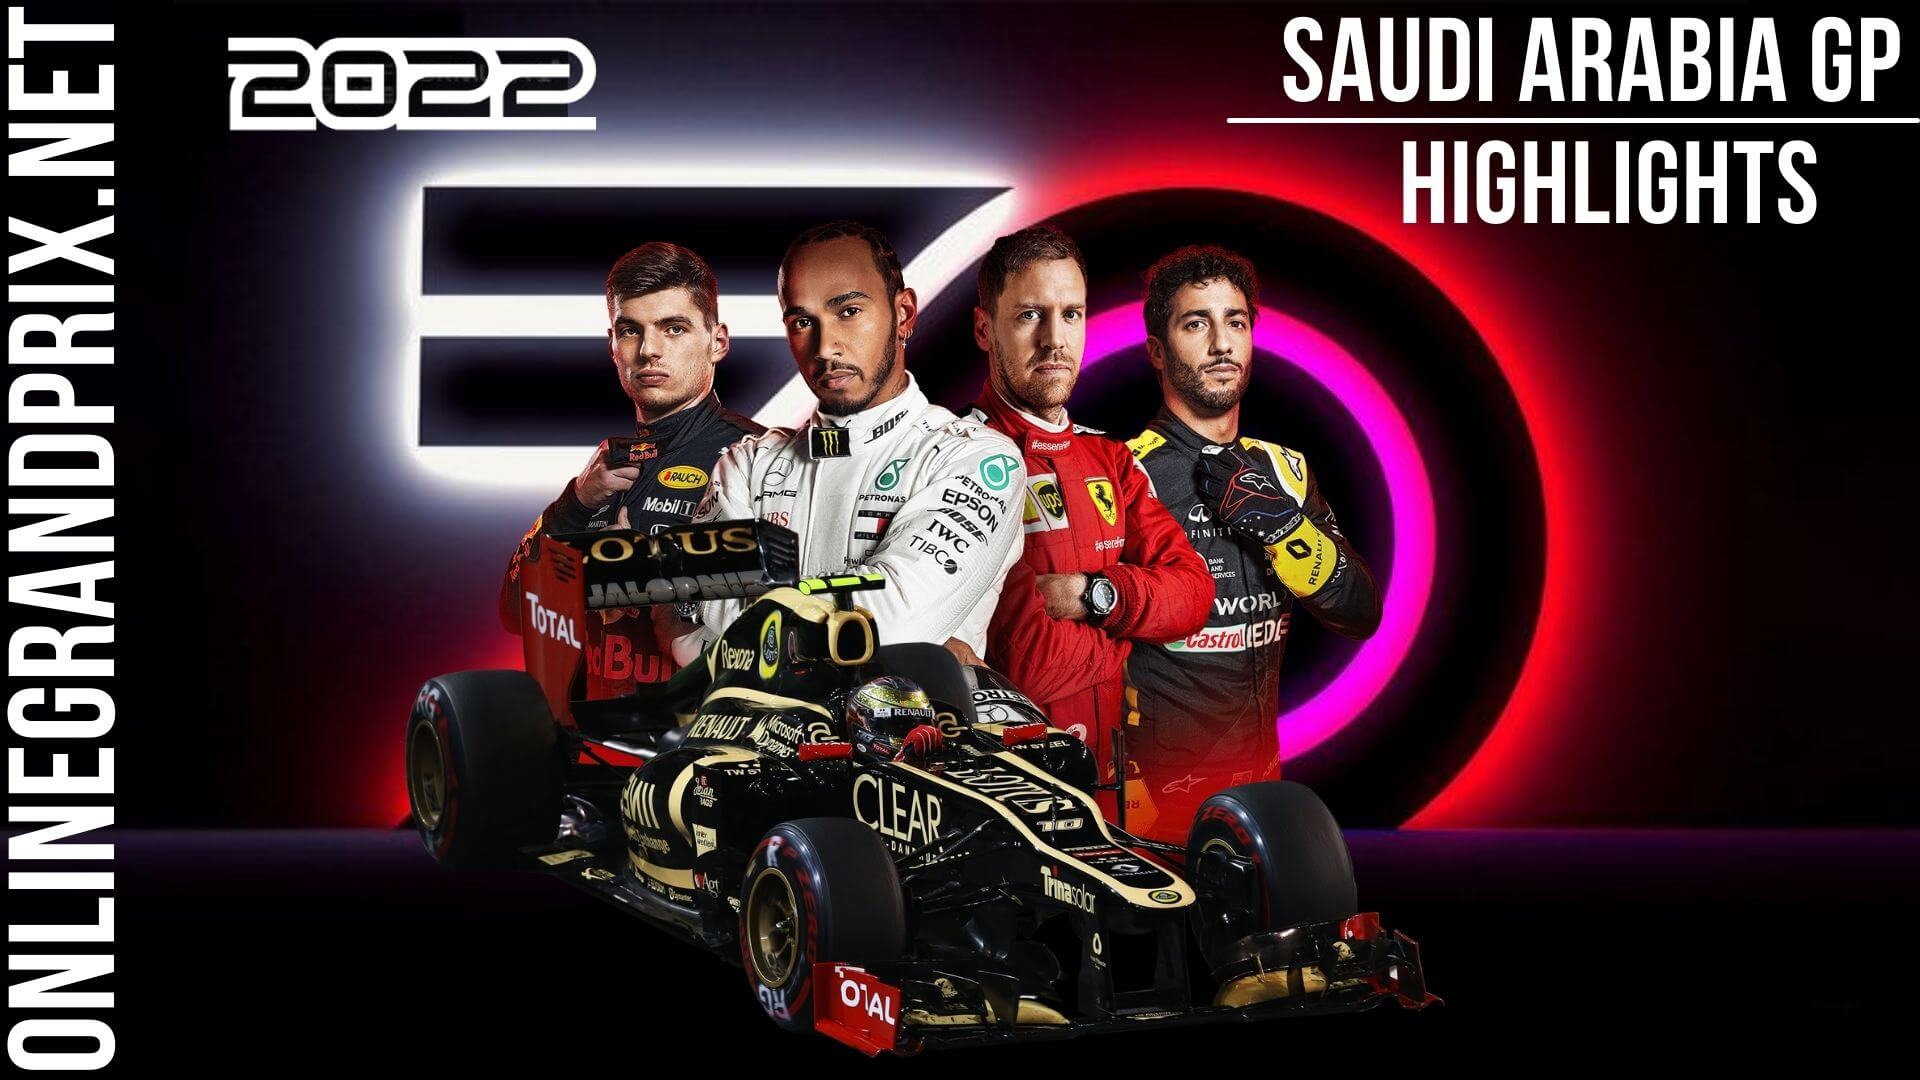 Saudi Arabia GP F1 Highlights 2022